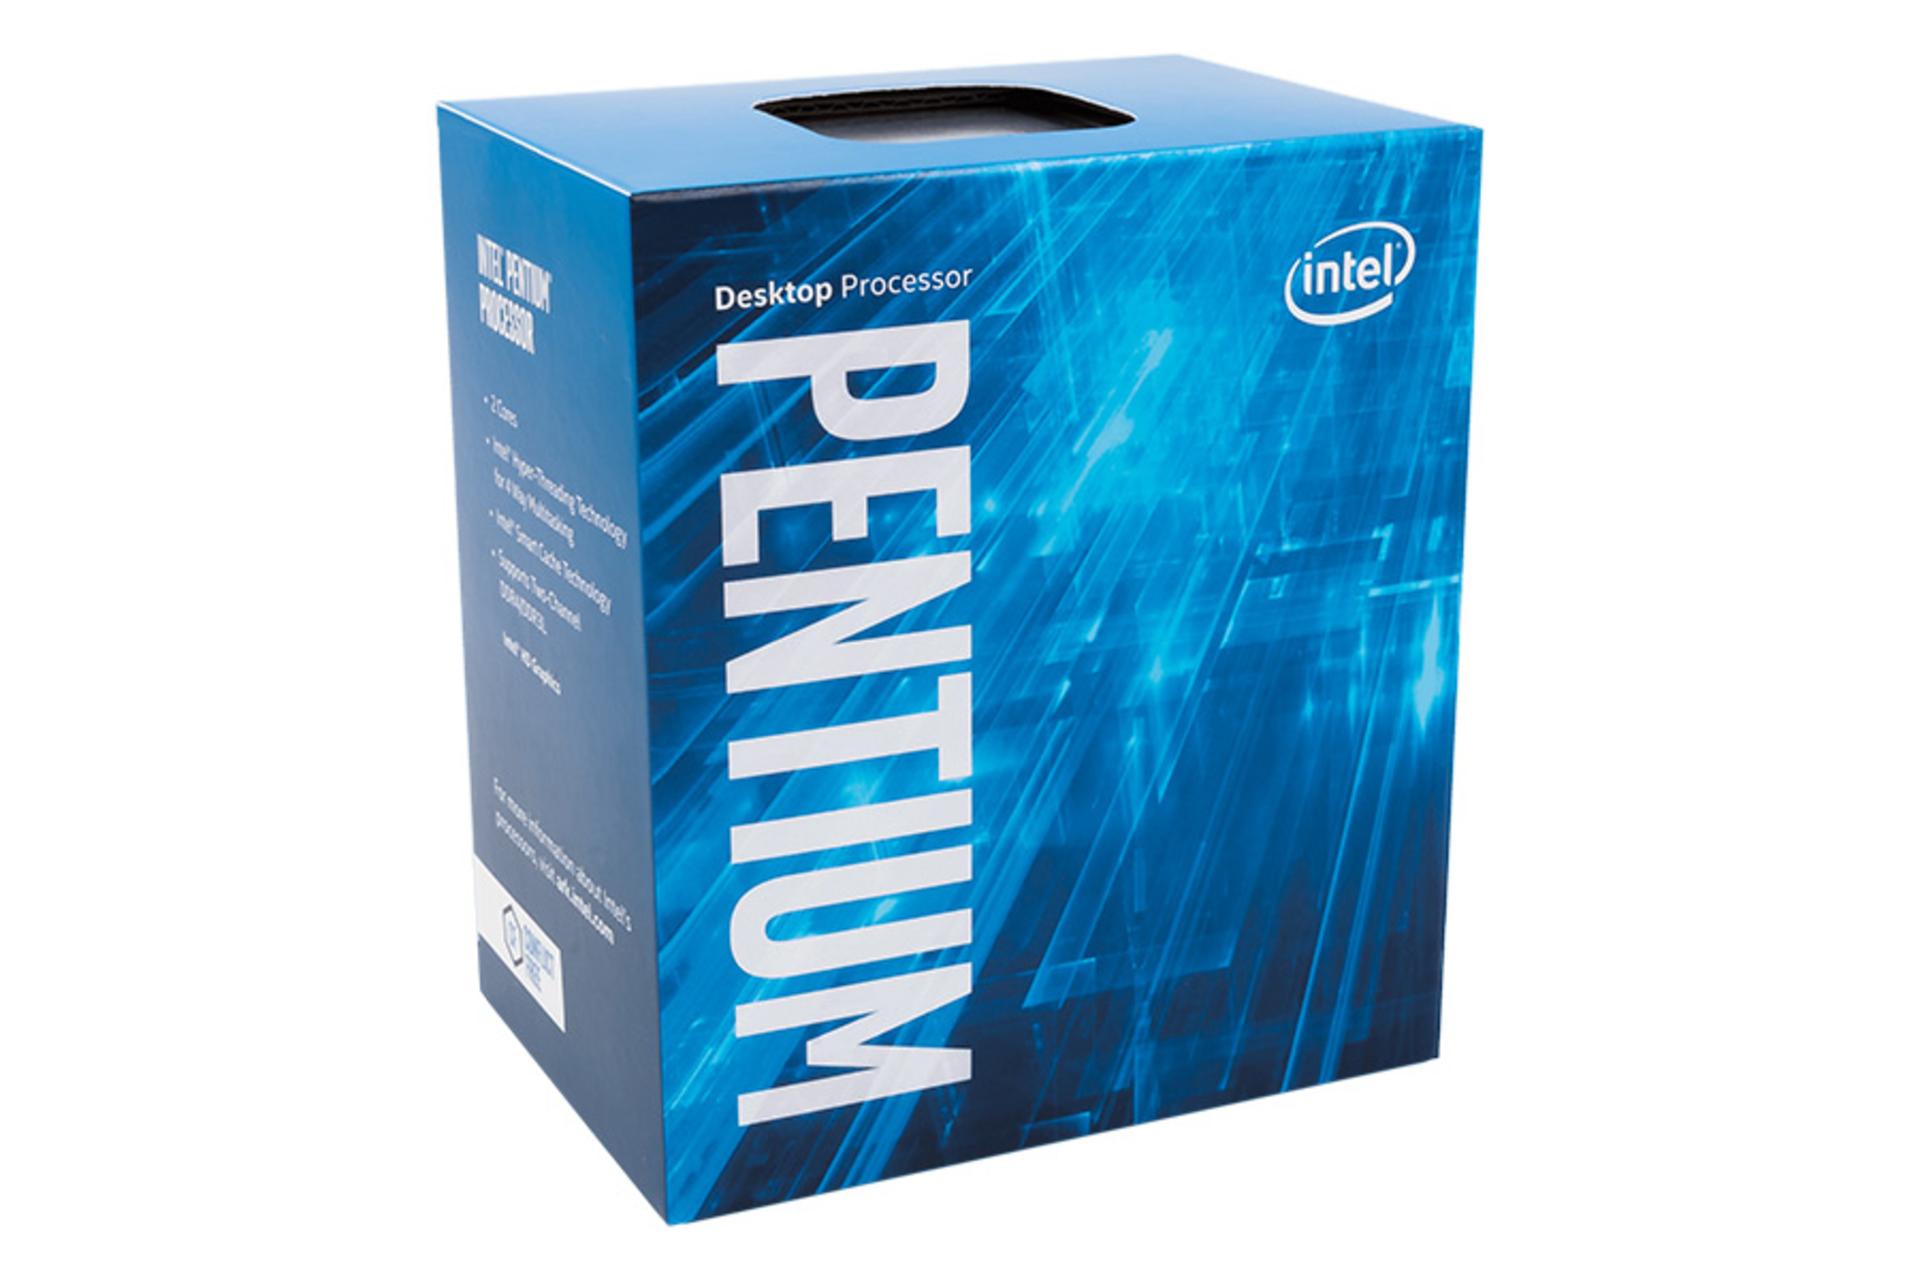  Intel Pentium G3420t / پنتیوم G3420t اینتل